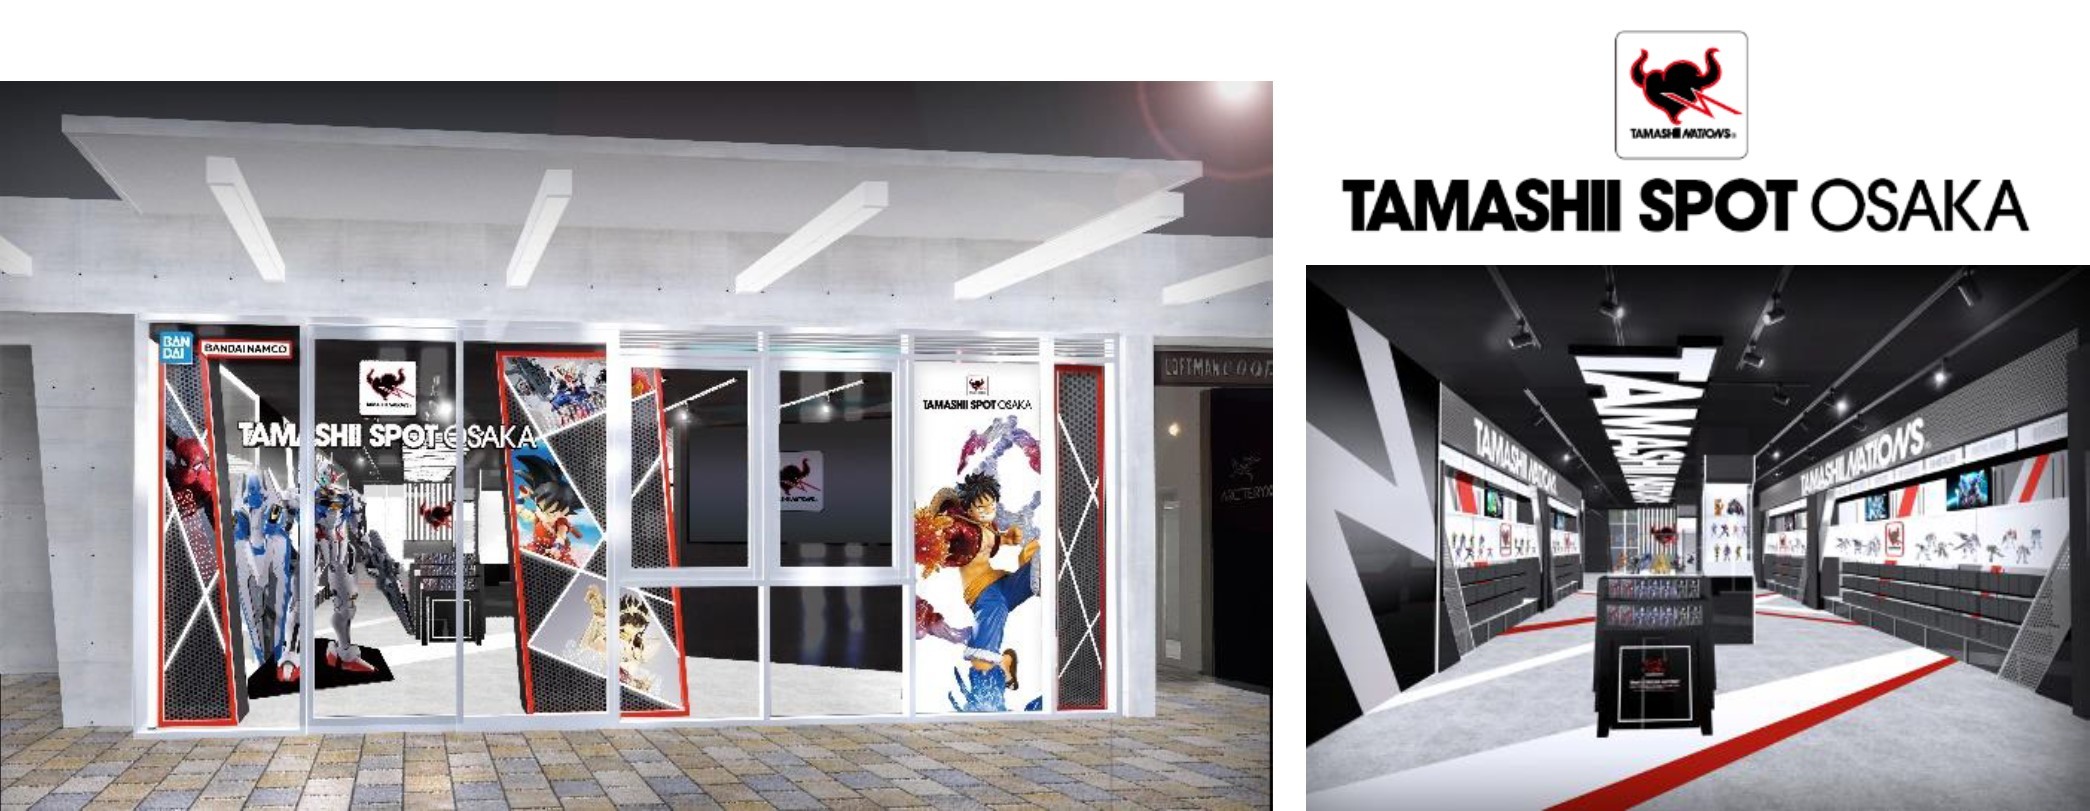 JMFビル梅田01(アーバンテラス茶屋町)に
株式会社BANDAI SPIRITSが手掛ける
大人向けコレクターズ商品ブランド「TAMASHII NATIONS」の
関西圏初となるオフィシャルショップ
『TAMASHII SPOT OSAKA』を誘致。
2023年9月28日(木)オープン！